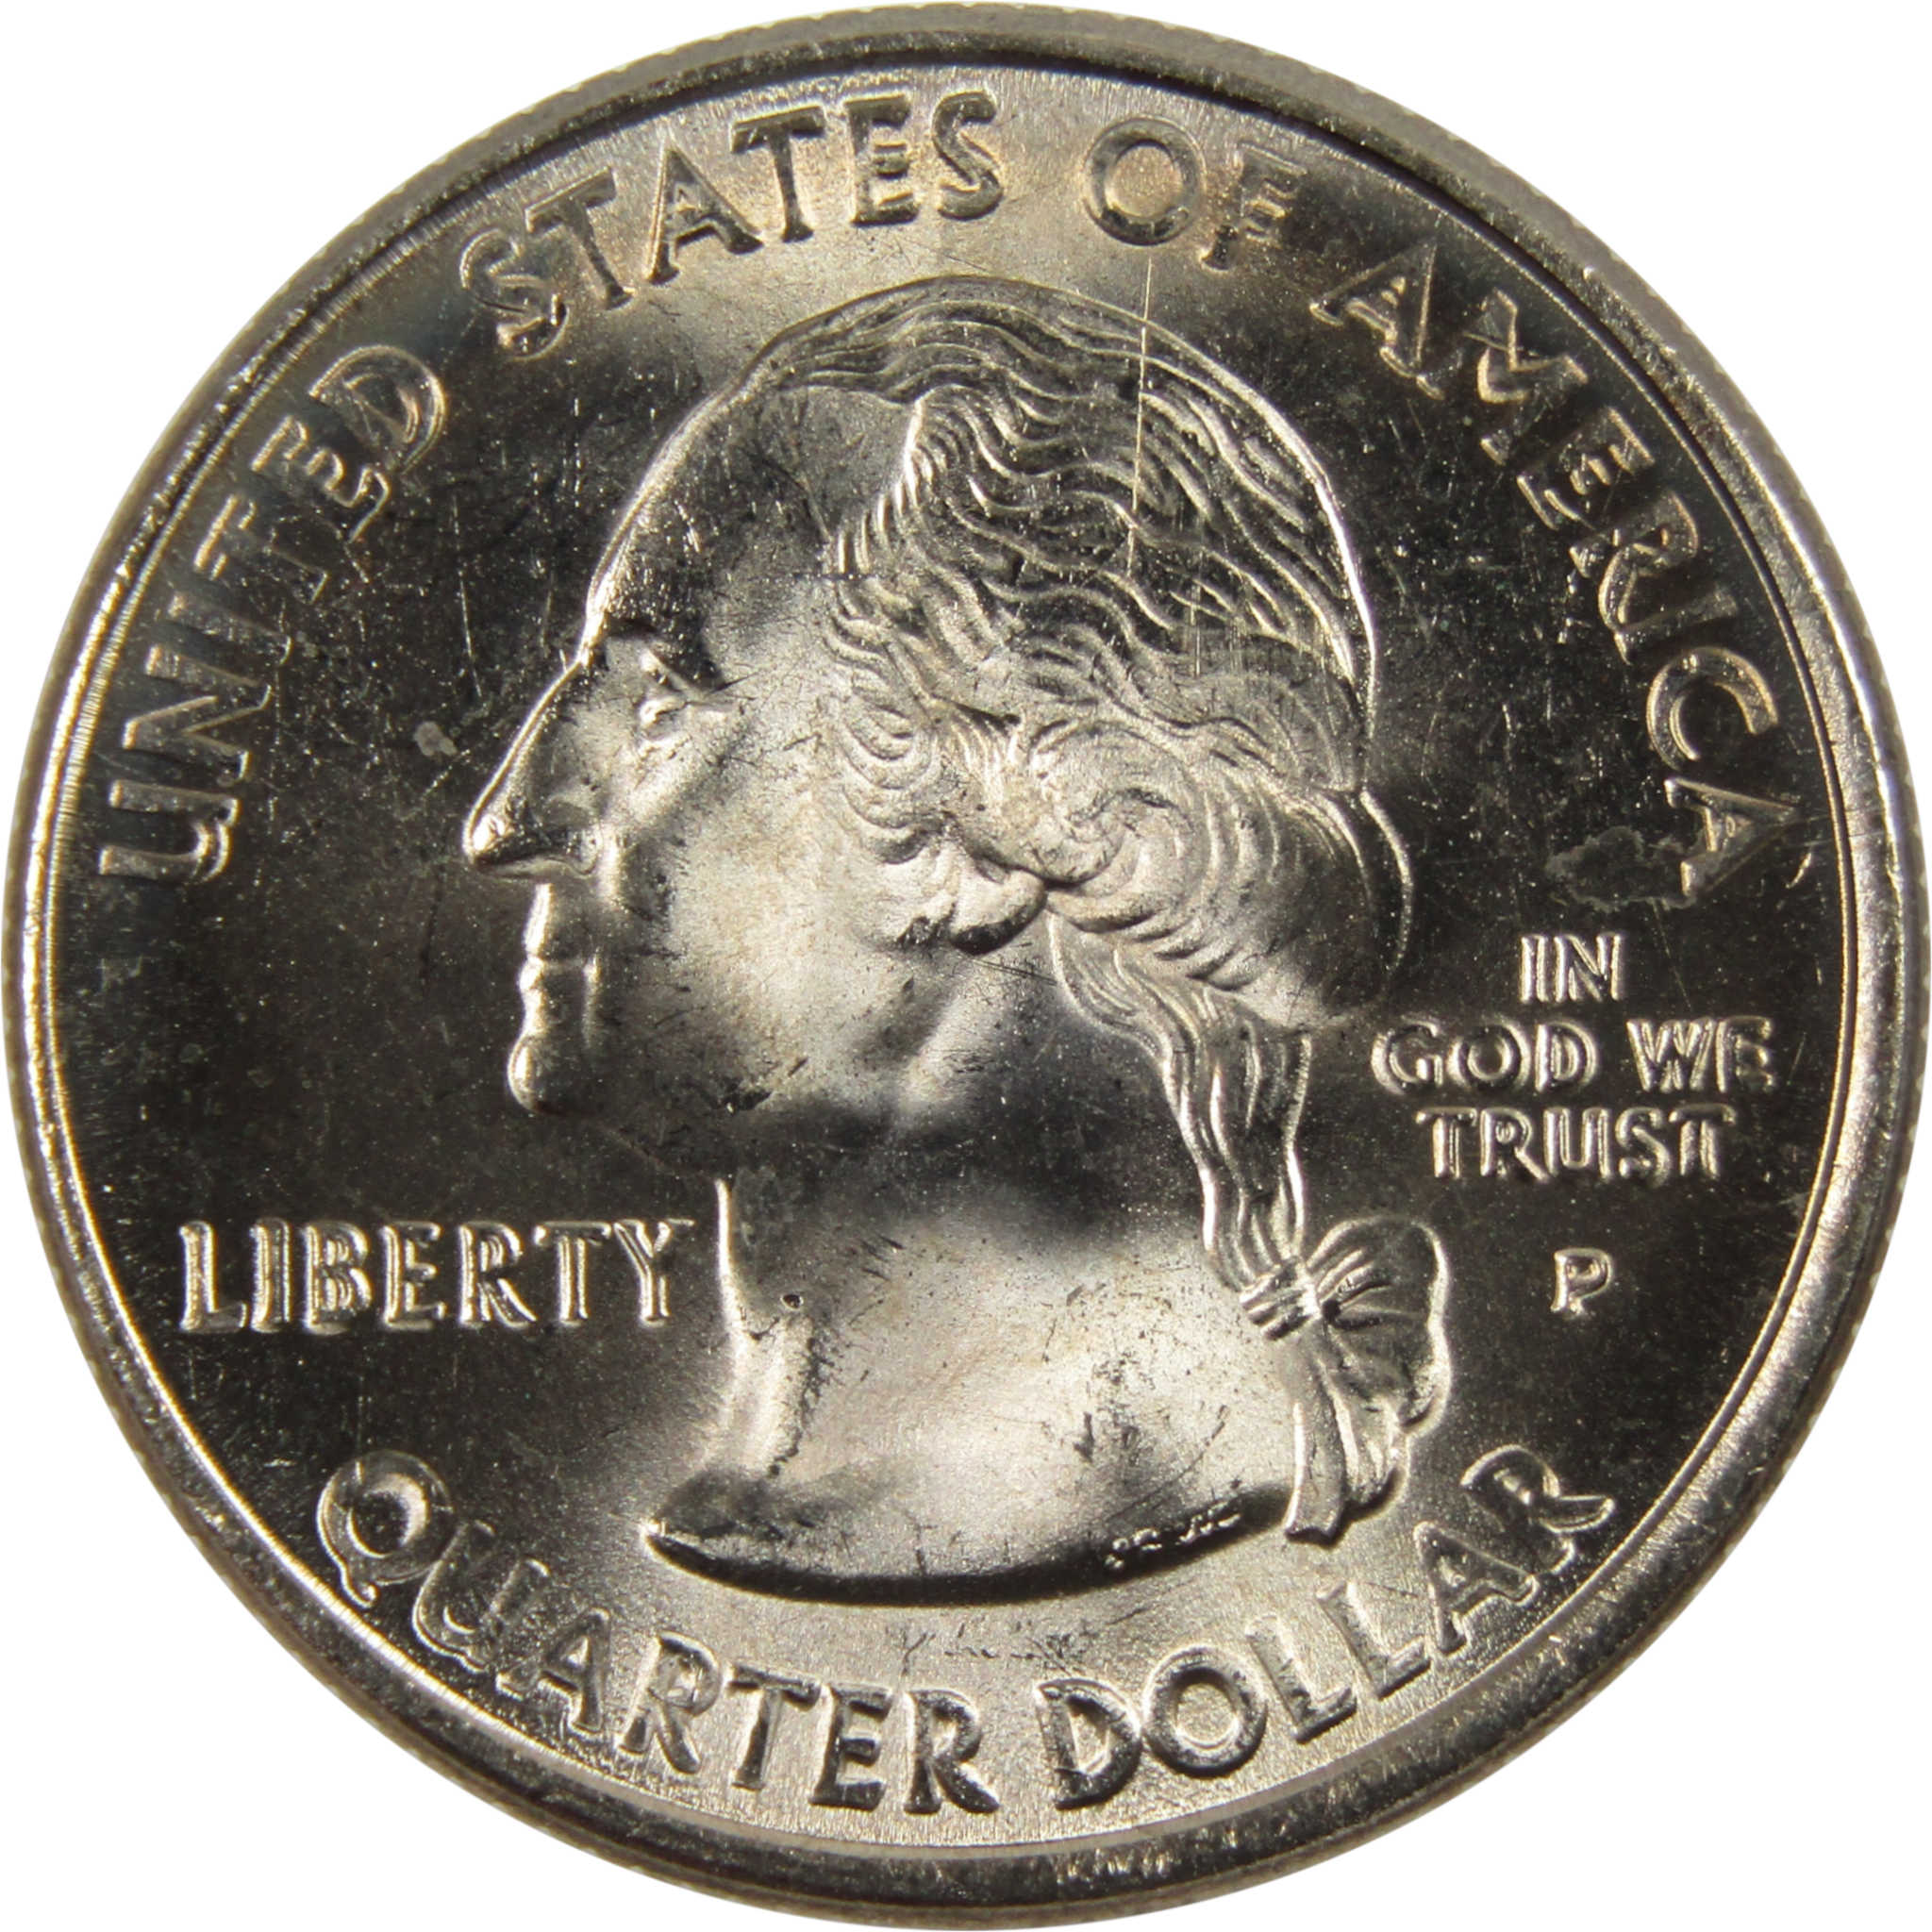 2000 P Virginia State Quarter BU Uncirculated Clad 25c Coin